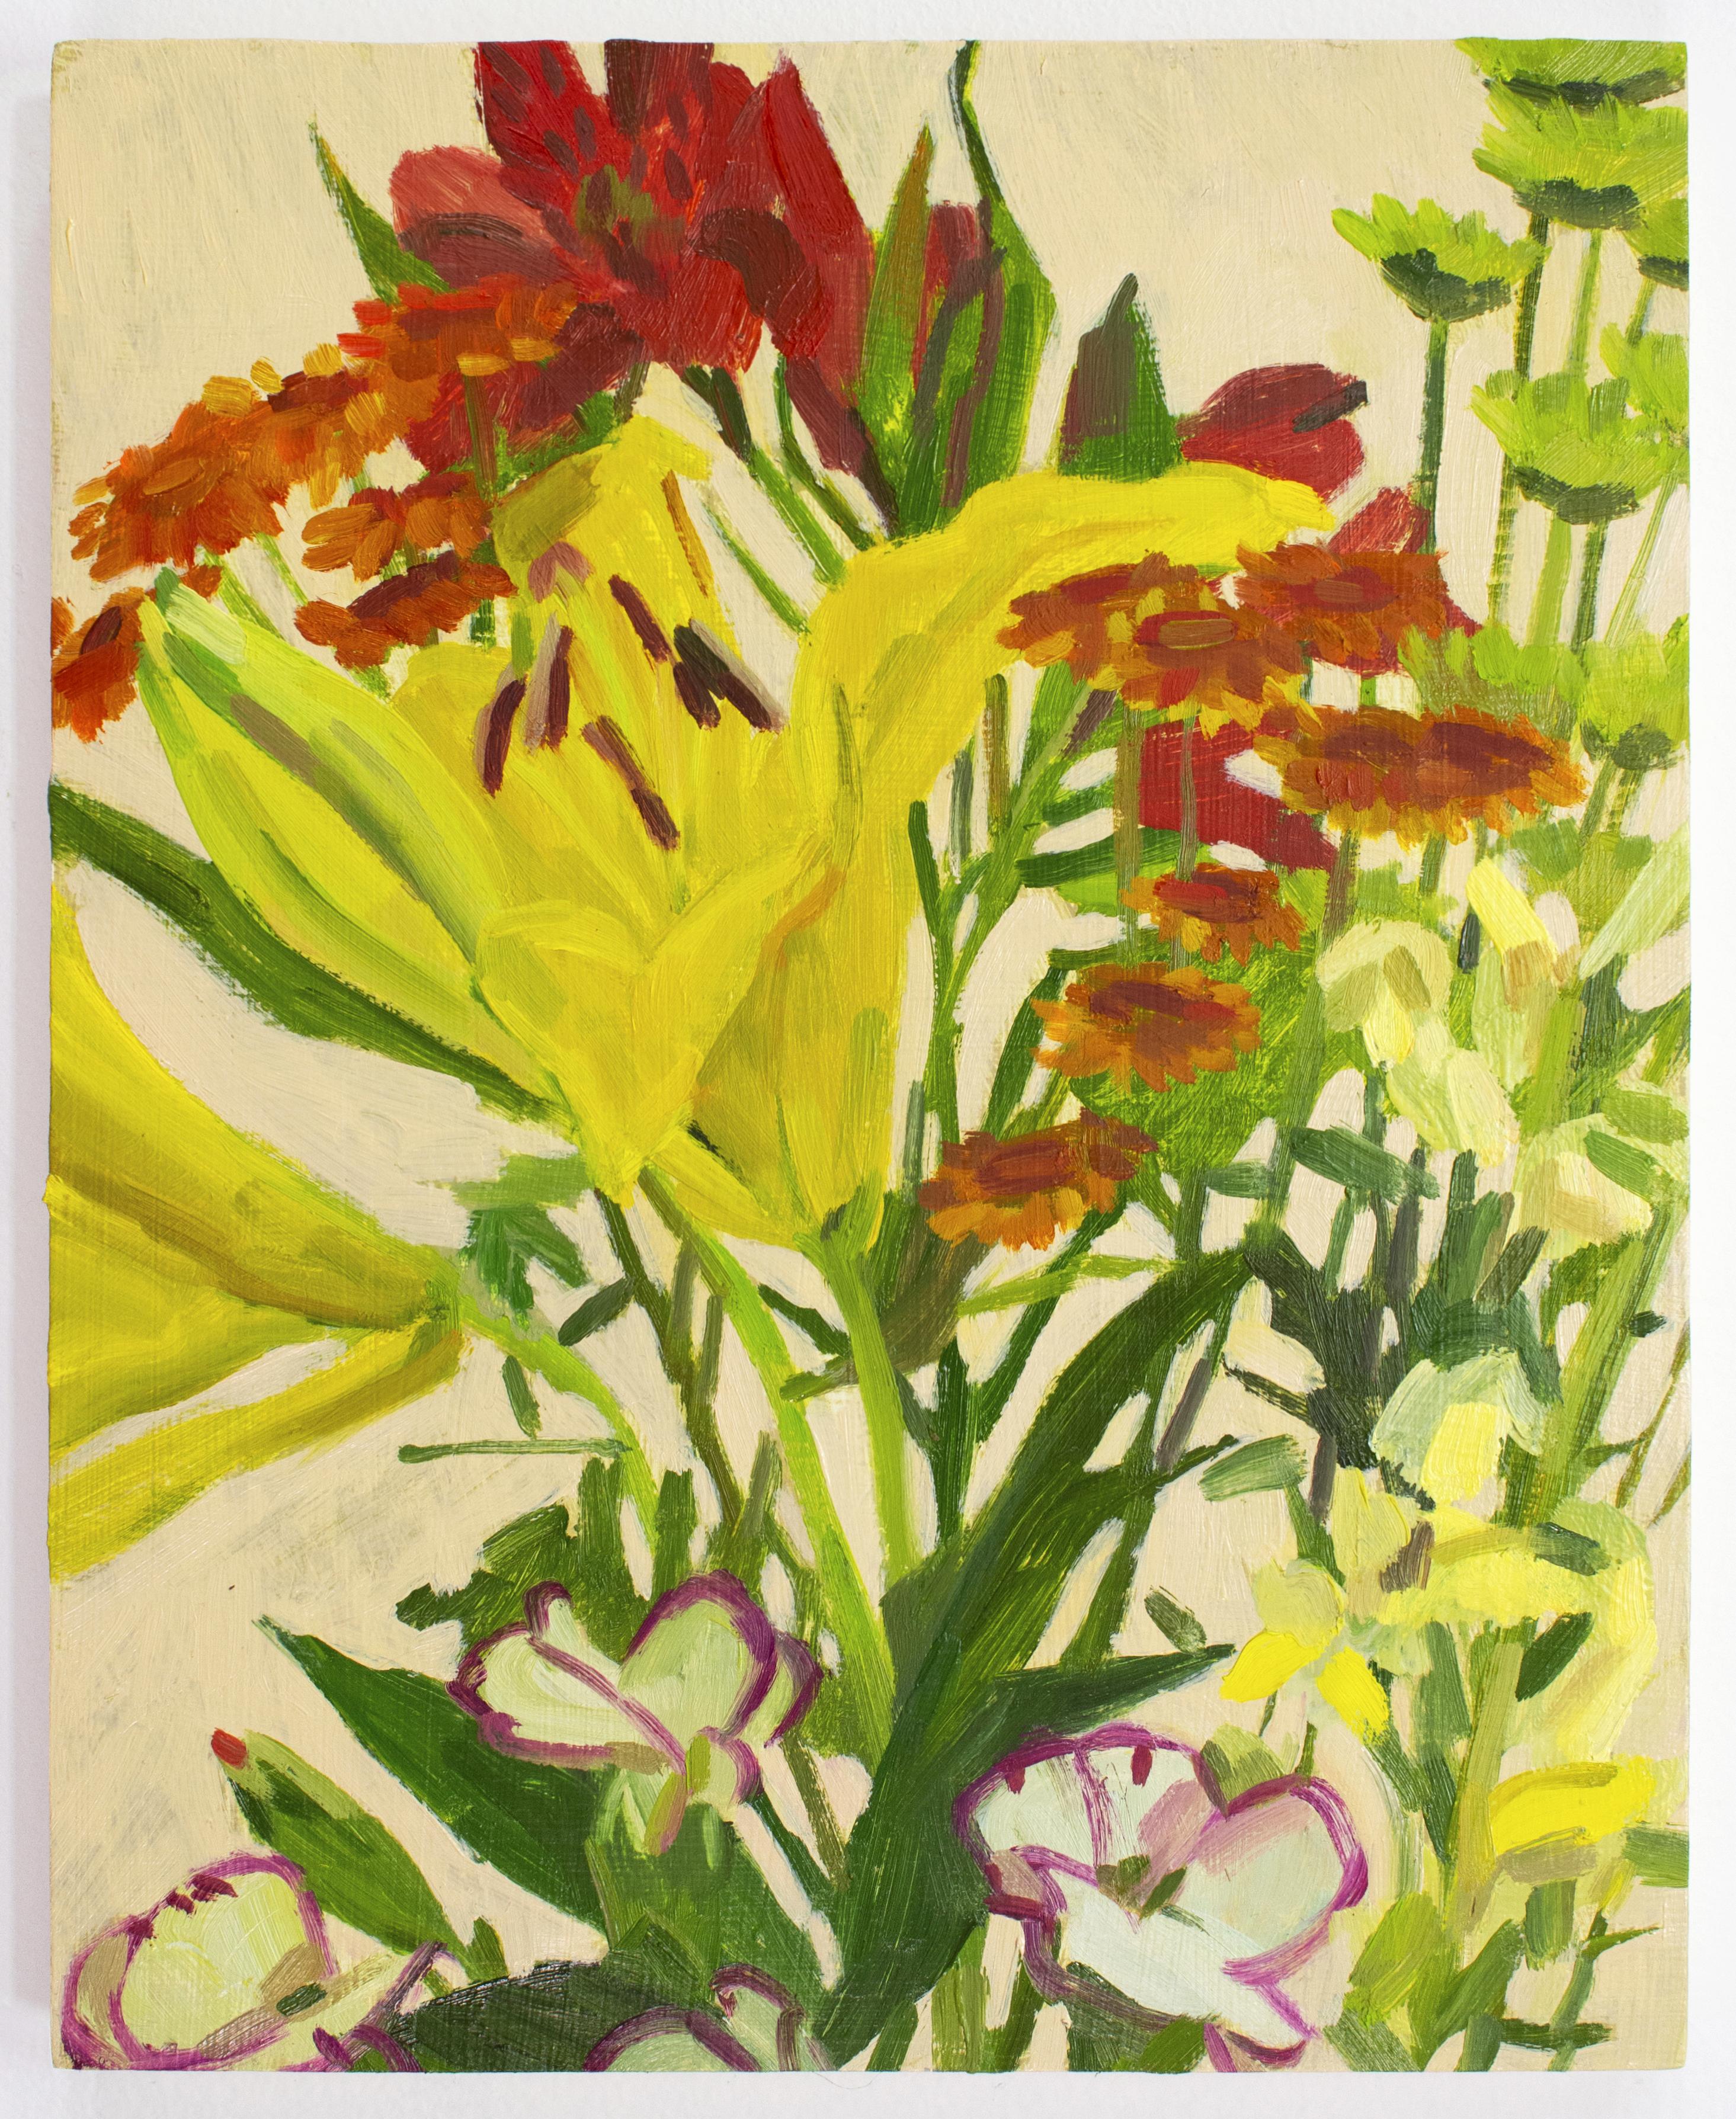 'Fall Bouquet' - still life - floral, botanical, impressionism - Painting by Christina Renfer Vogel